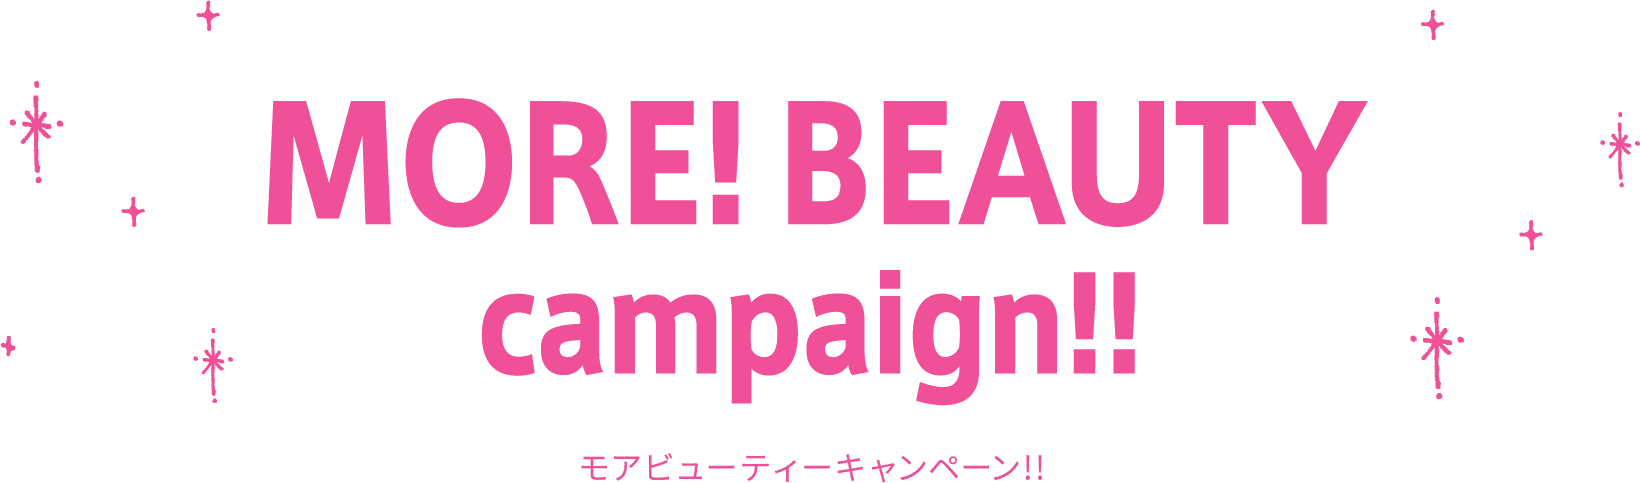 MORE! BEAUTY campaign!! モアビューティーキャンペーン!!